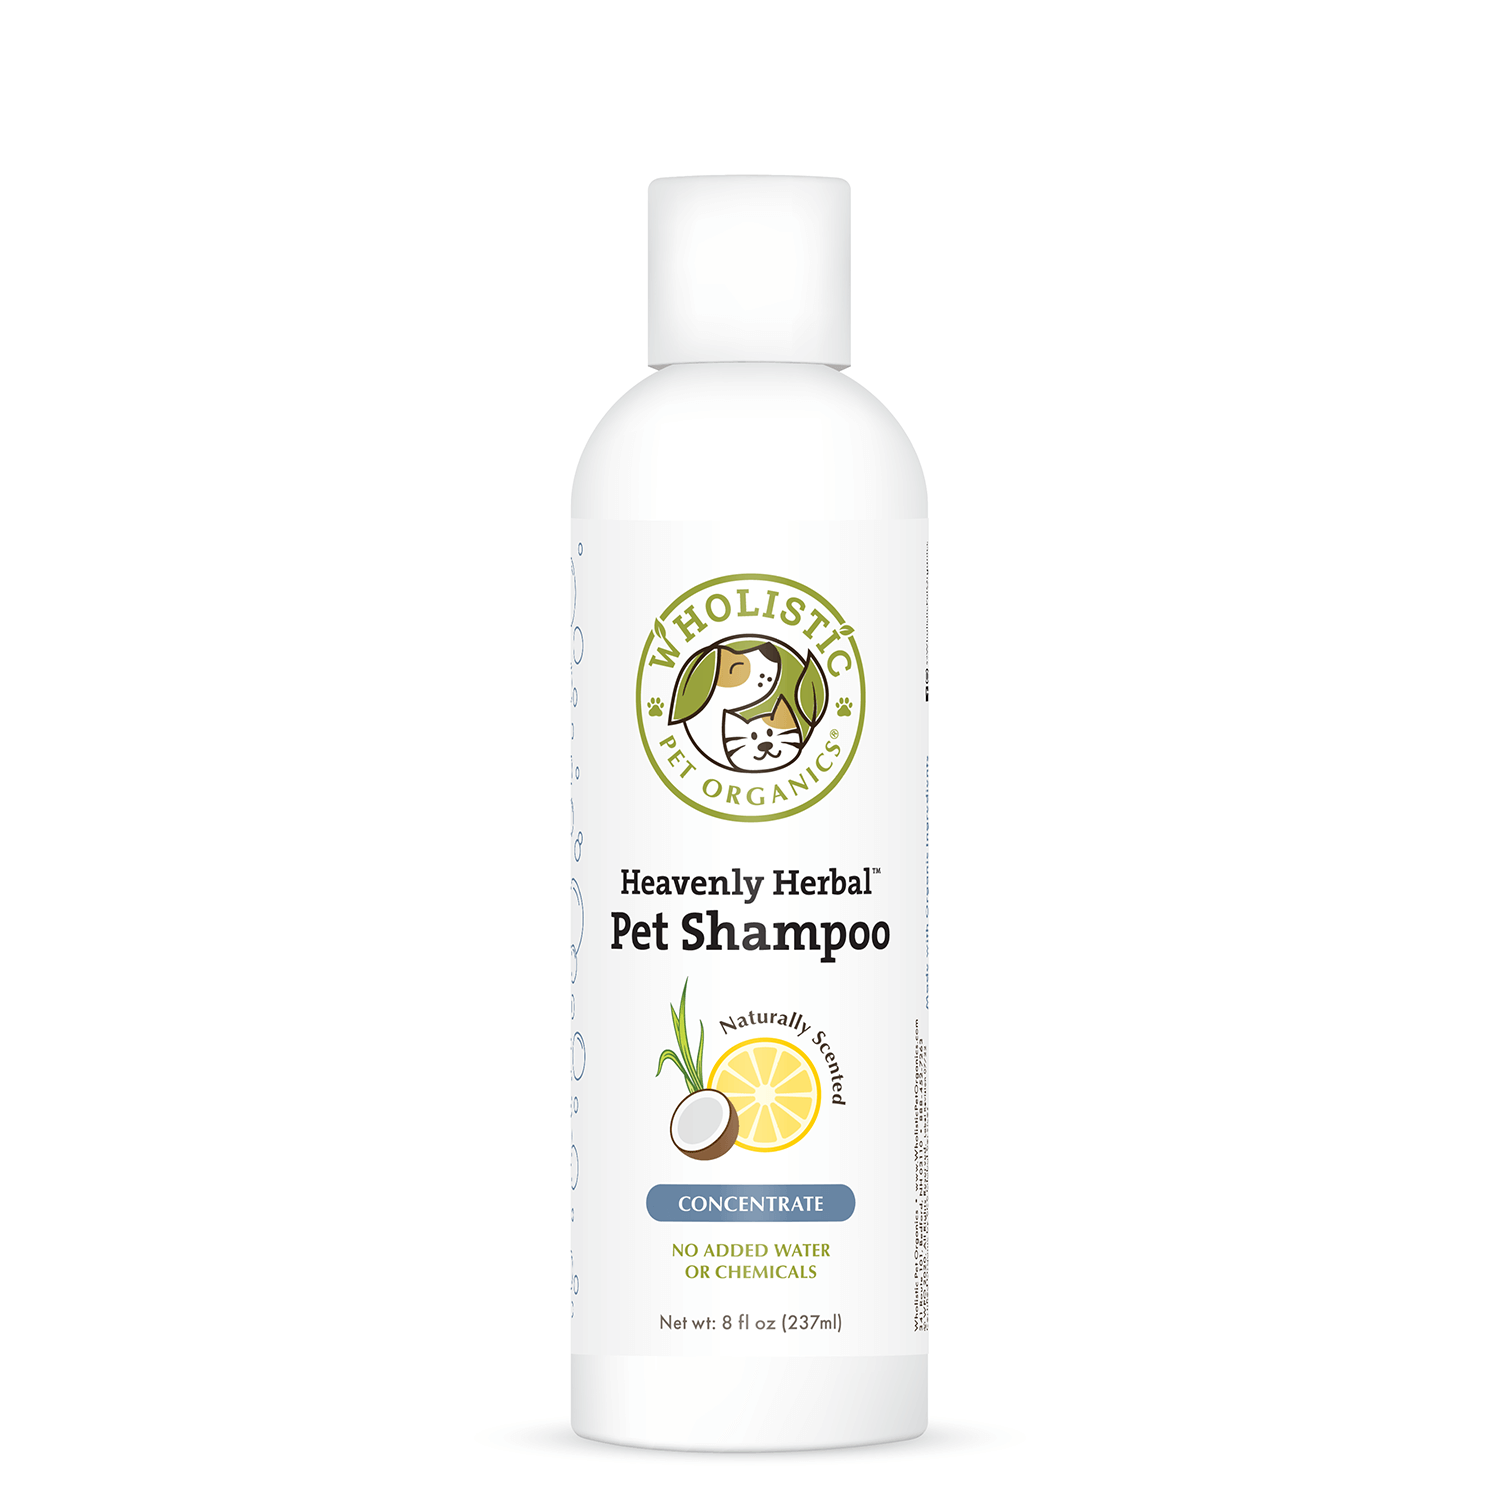 Wholistic Pet Organics Heavenly Herbal Pet Shampoo